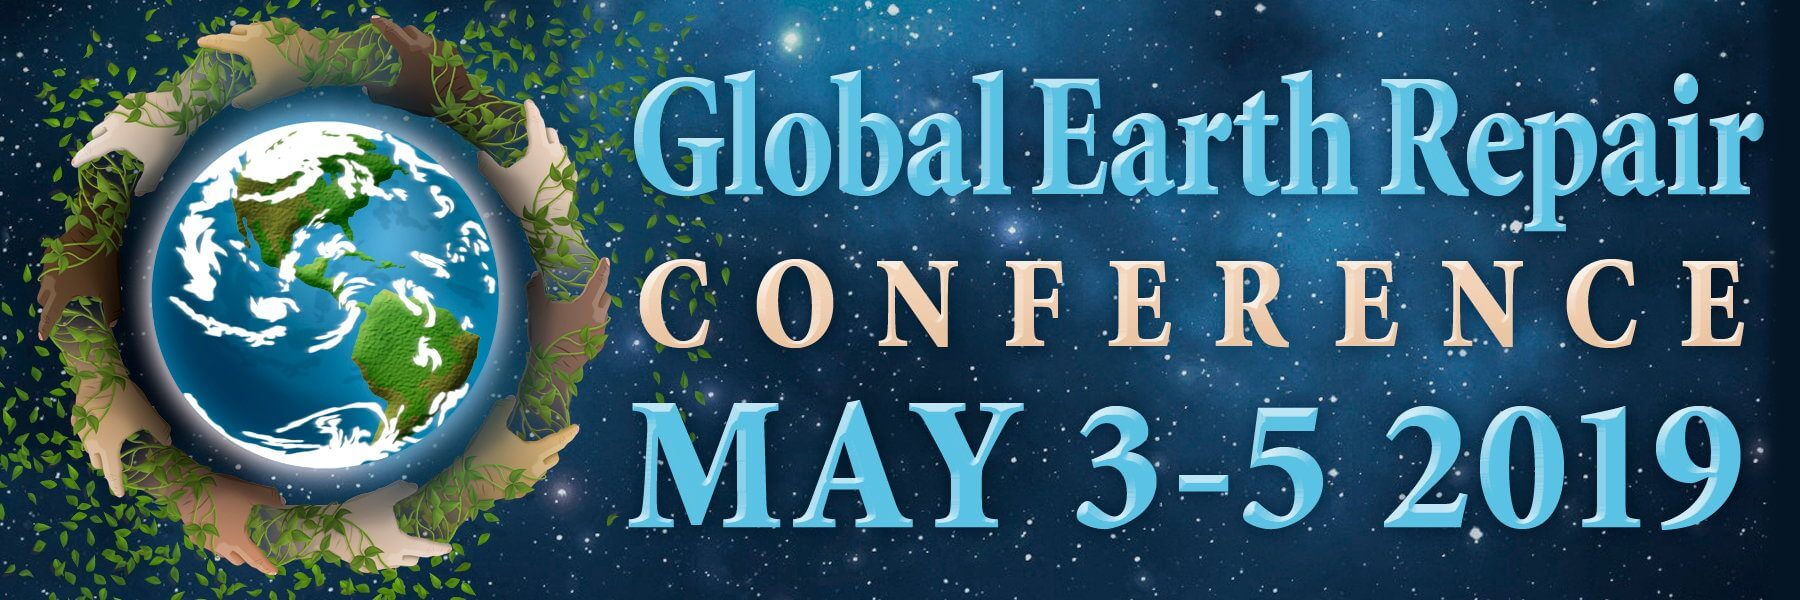 Global Earth Repair Conference